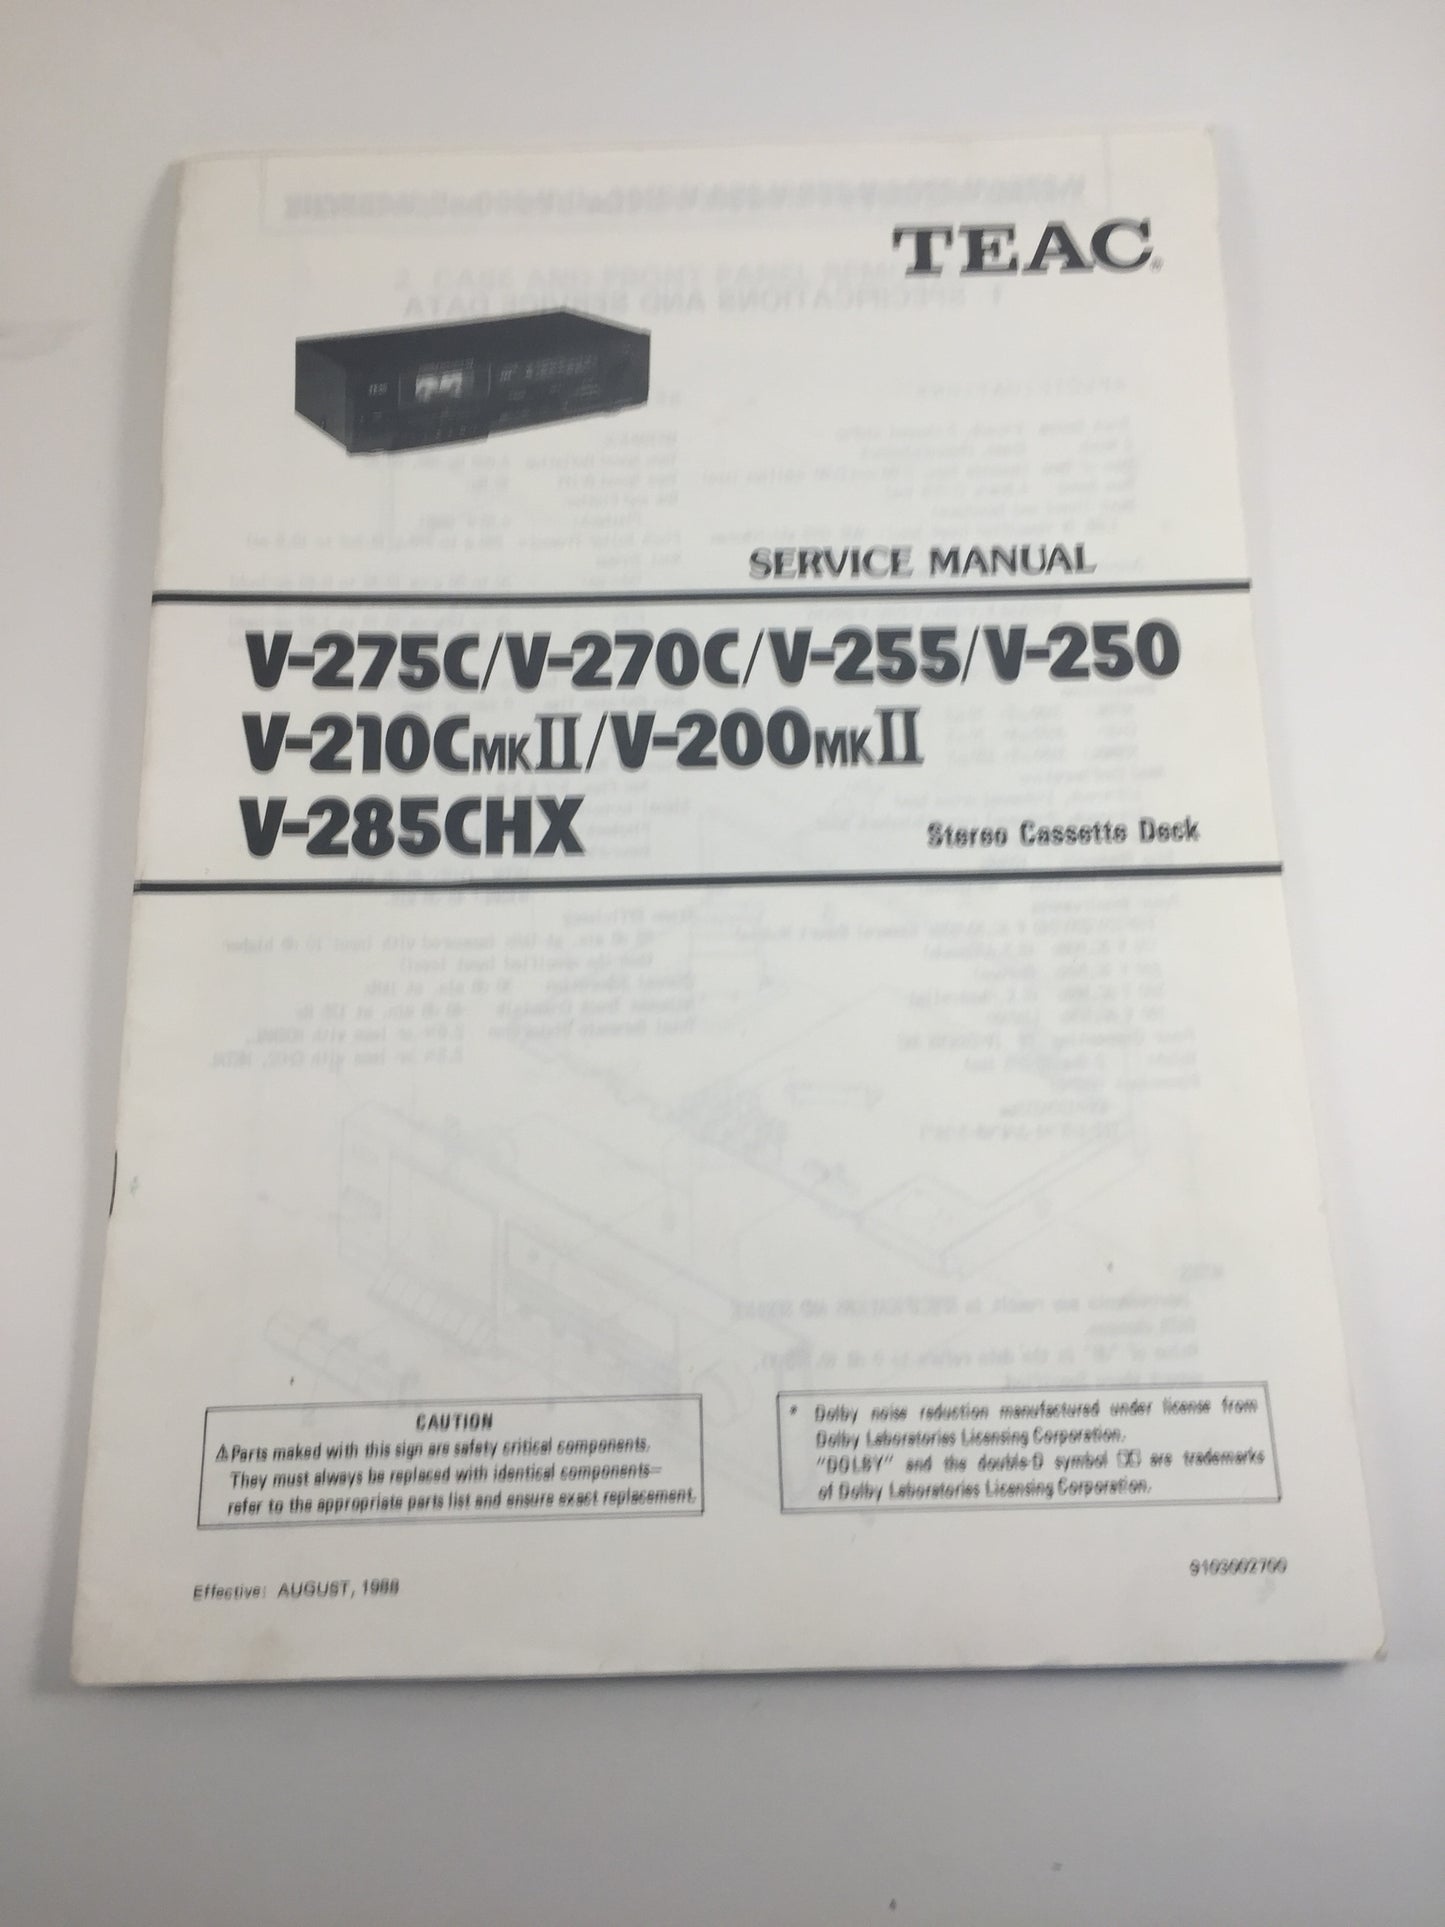 TEAC V-275C/V-270C/V-255/V-250/V-210C mk2/V-200 mk2/V-285CHX Stereo Cassette Deck Service Manual